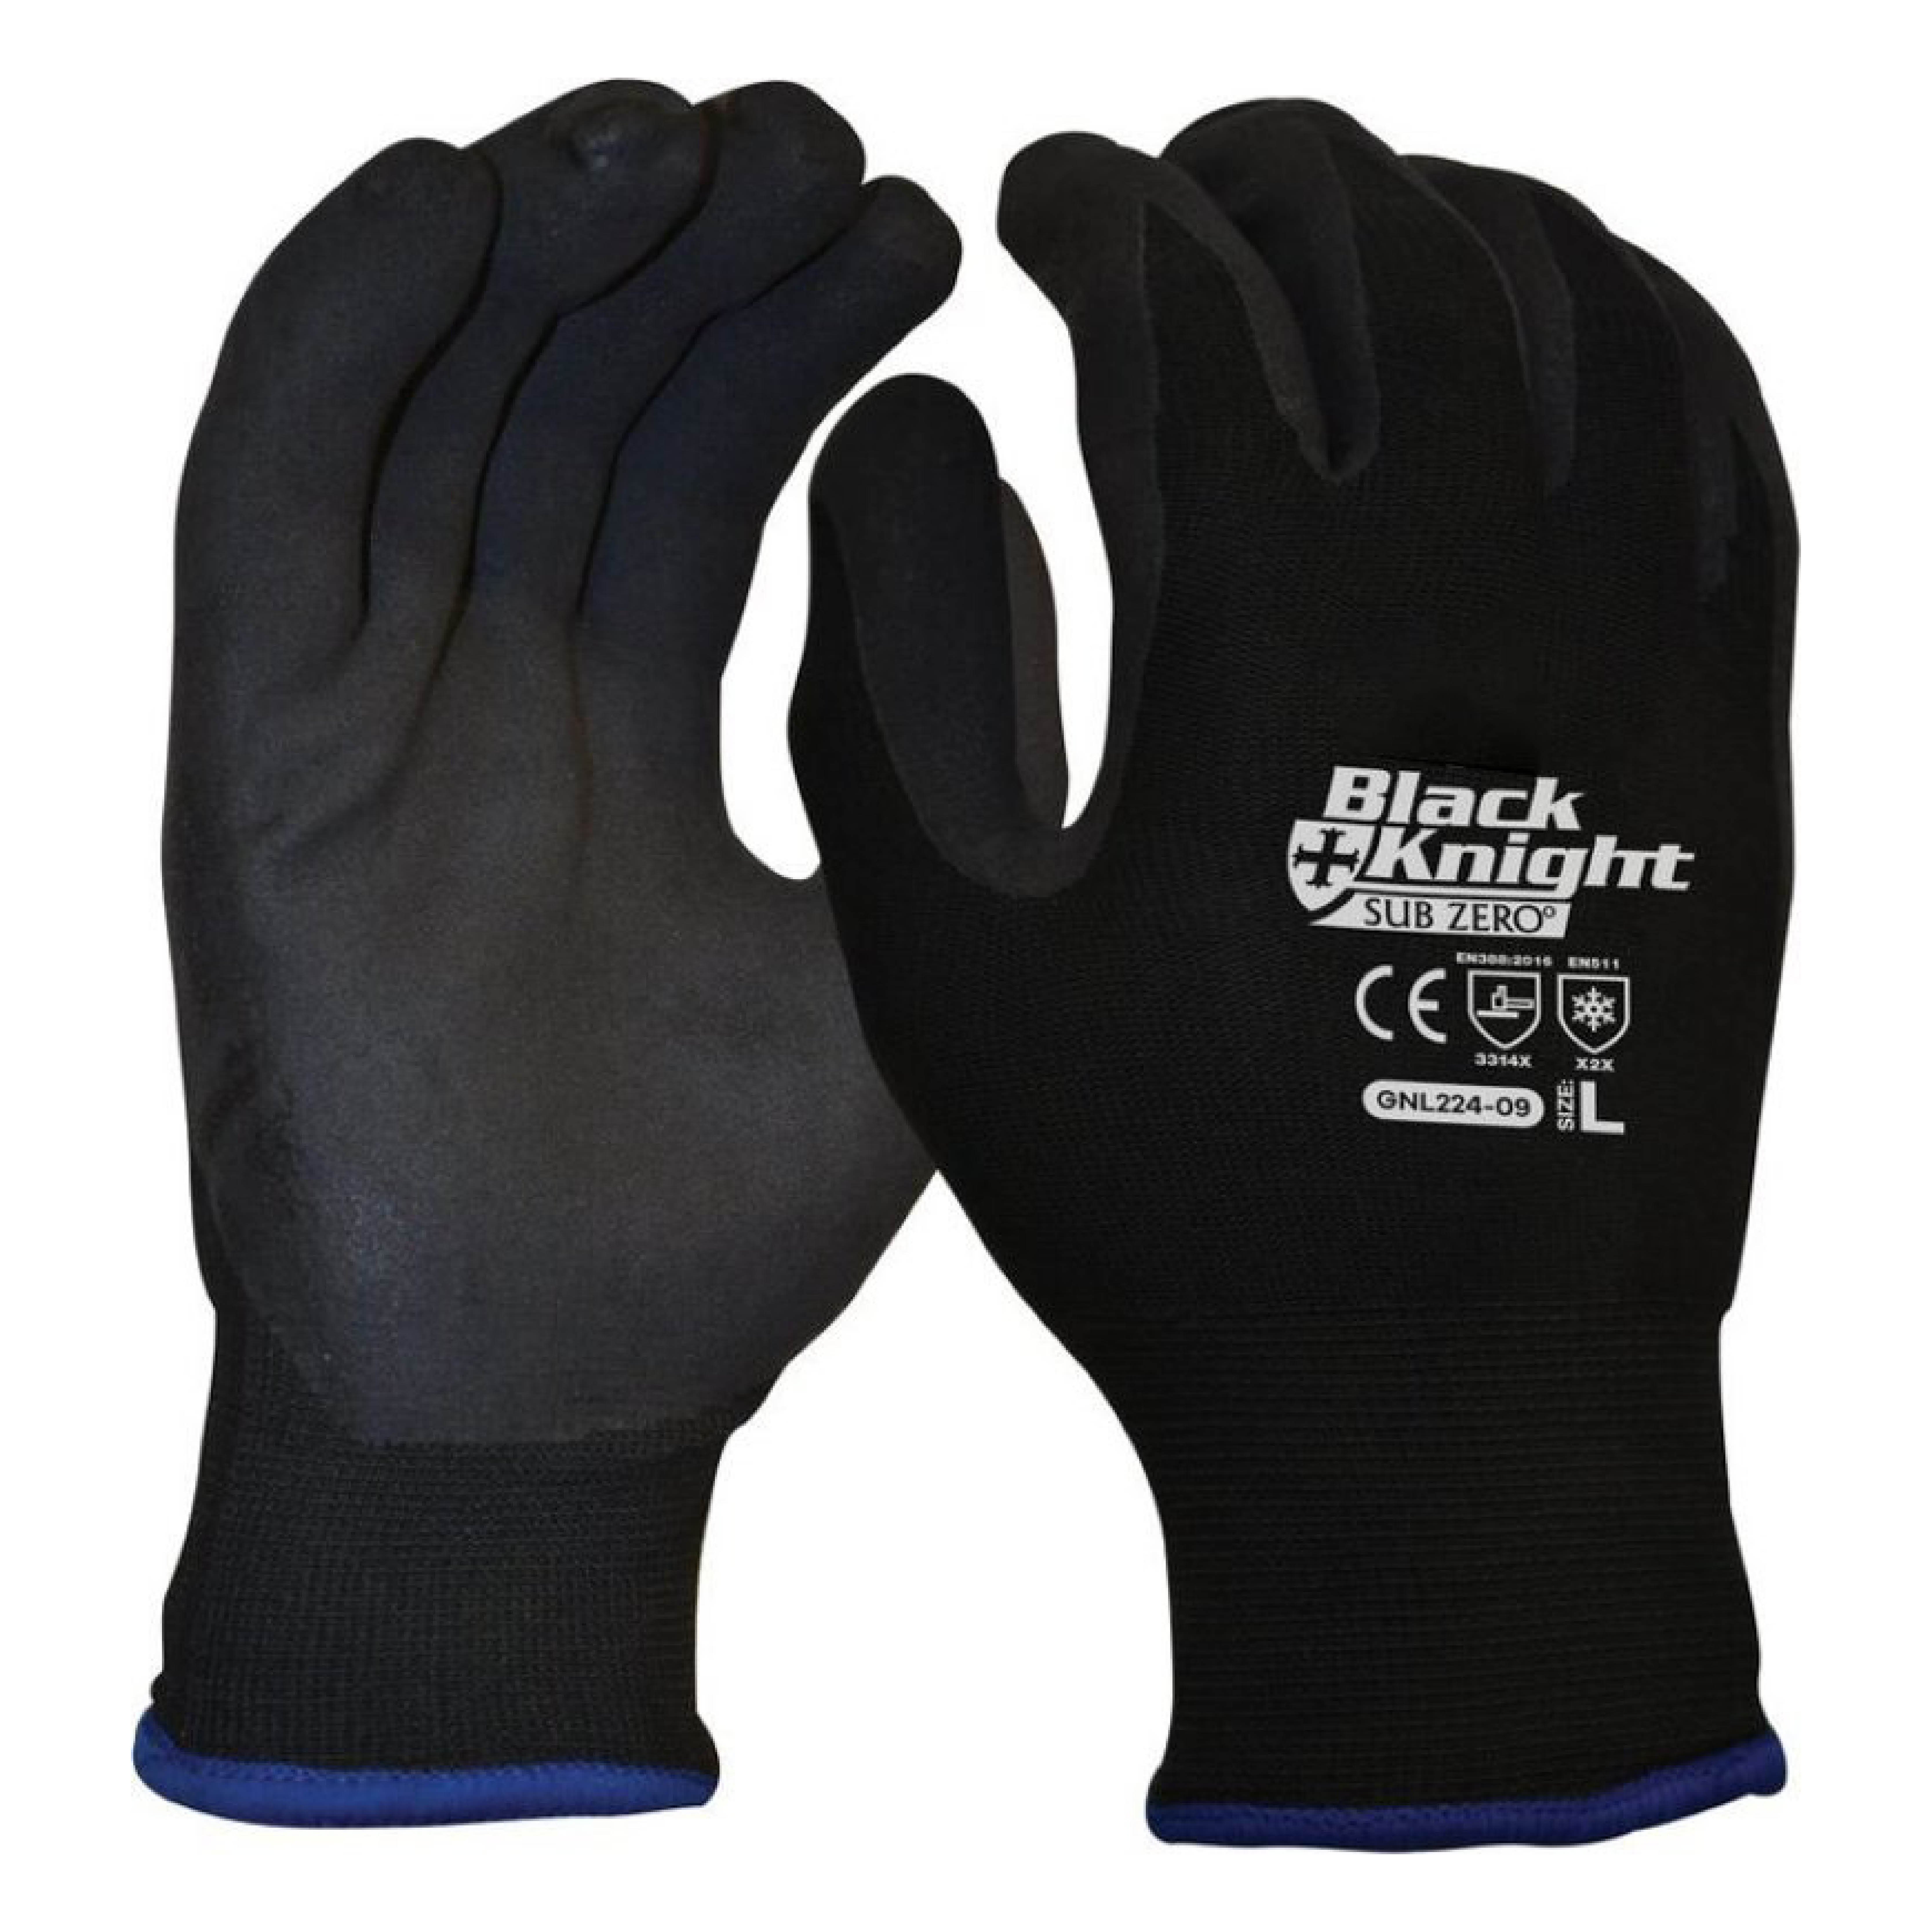 Black Knight Sub Zero Thermal Glove Large Size 9 (1 pair)